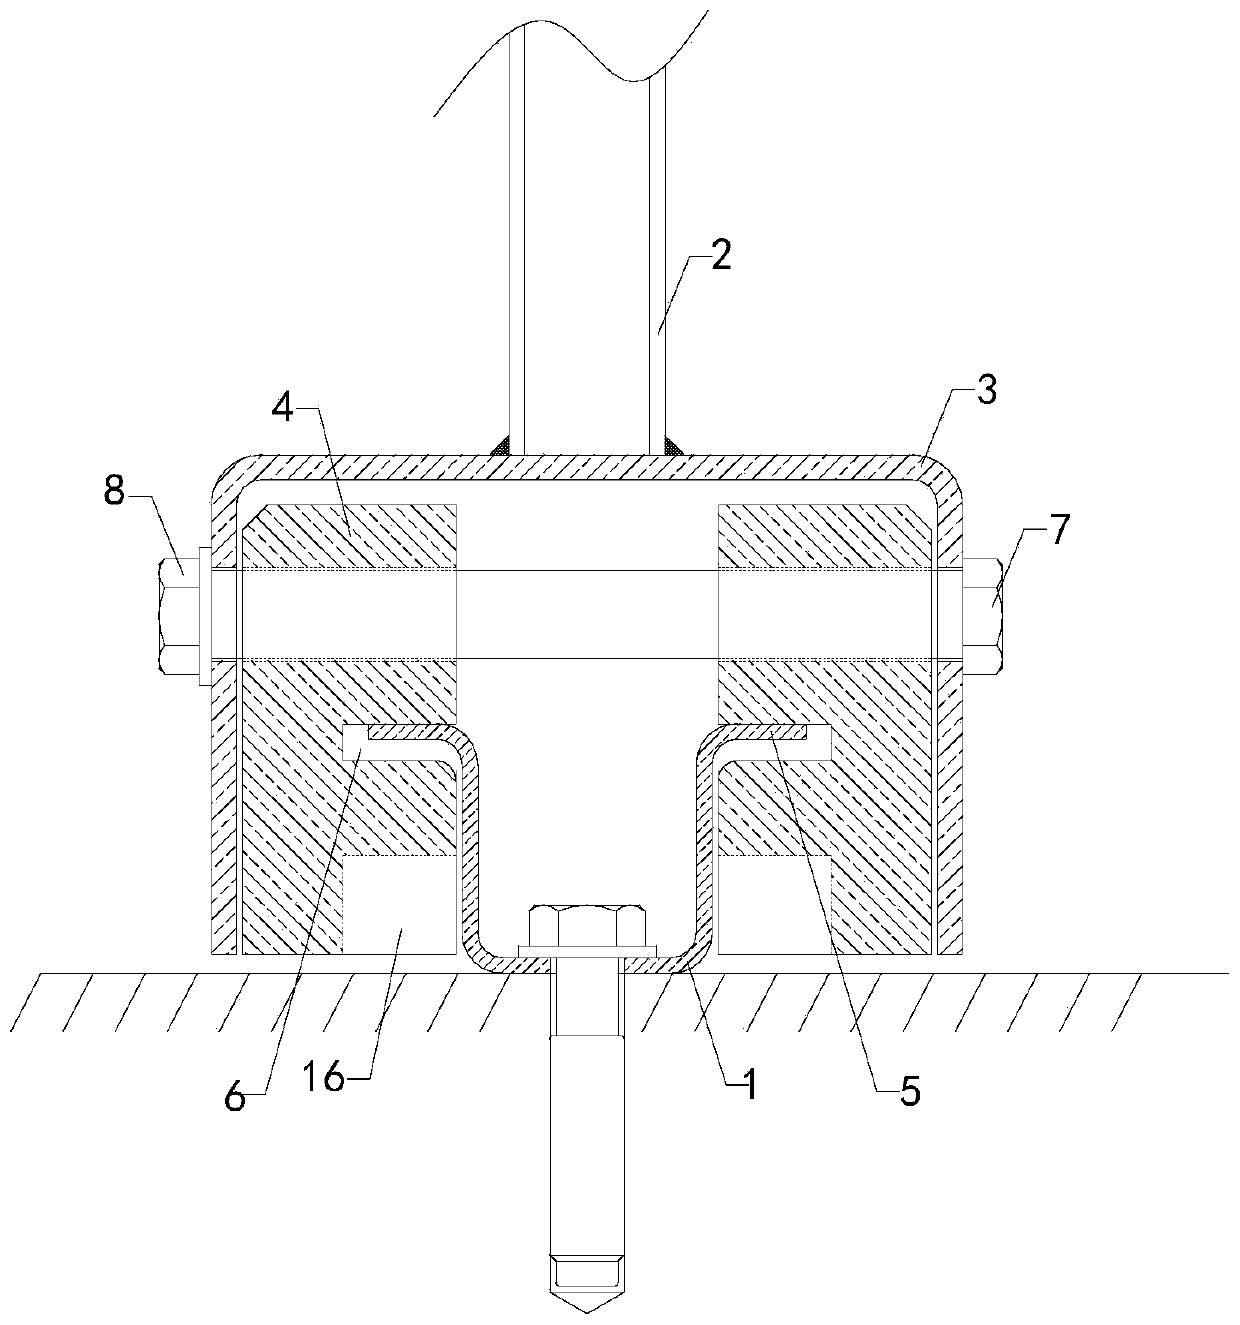 Slider structure of rail type manure scraper system